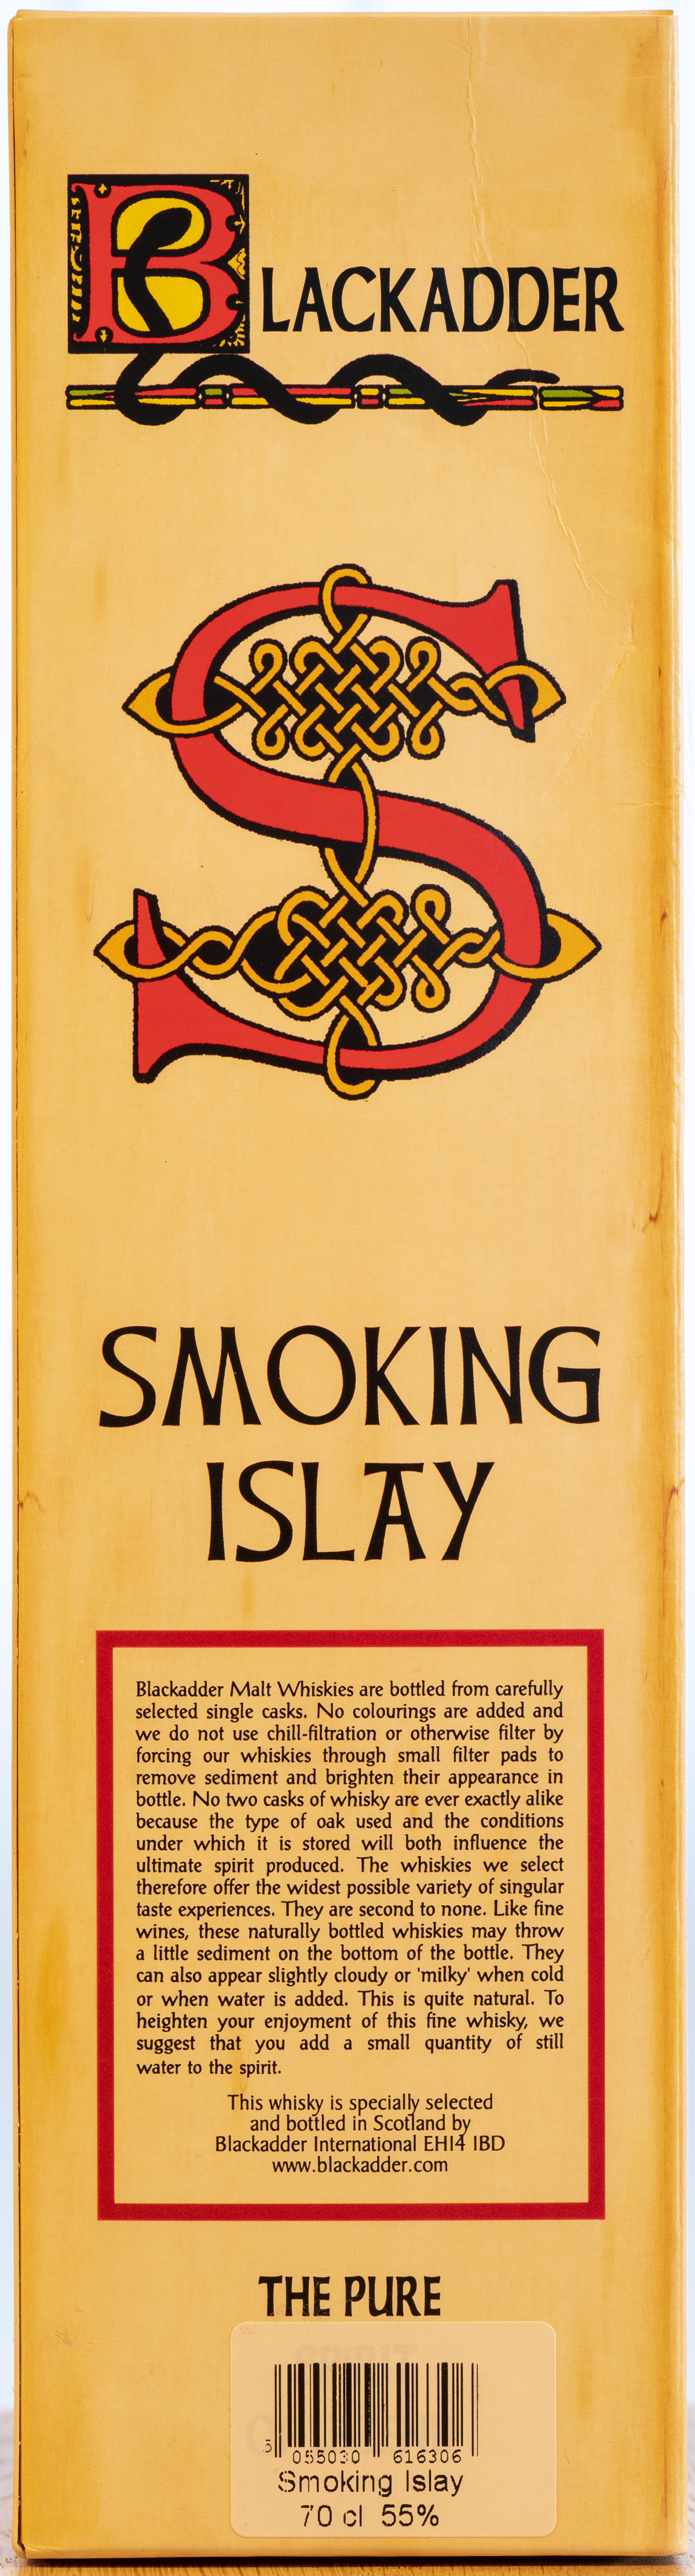 Billede: PHC_3931 - Smoking Islay - box back.jpg